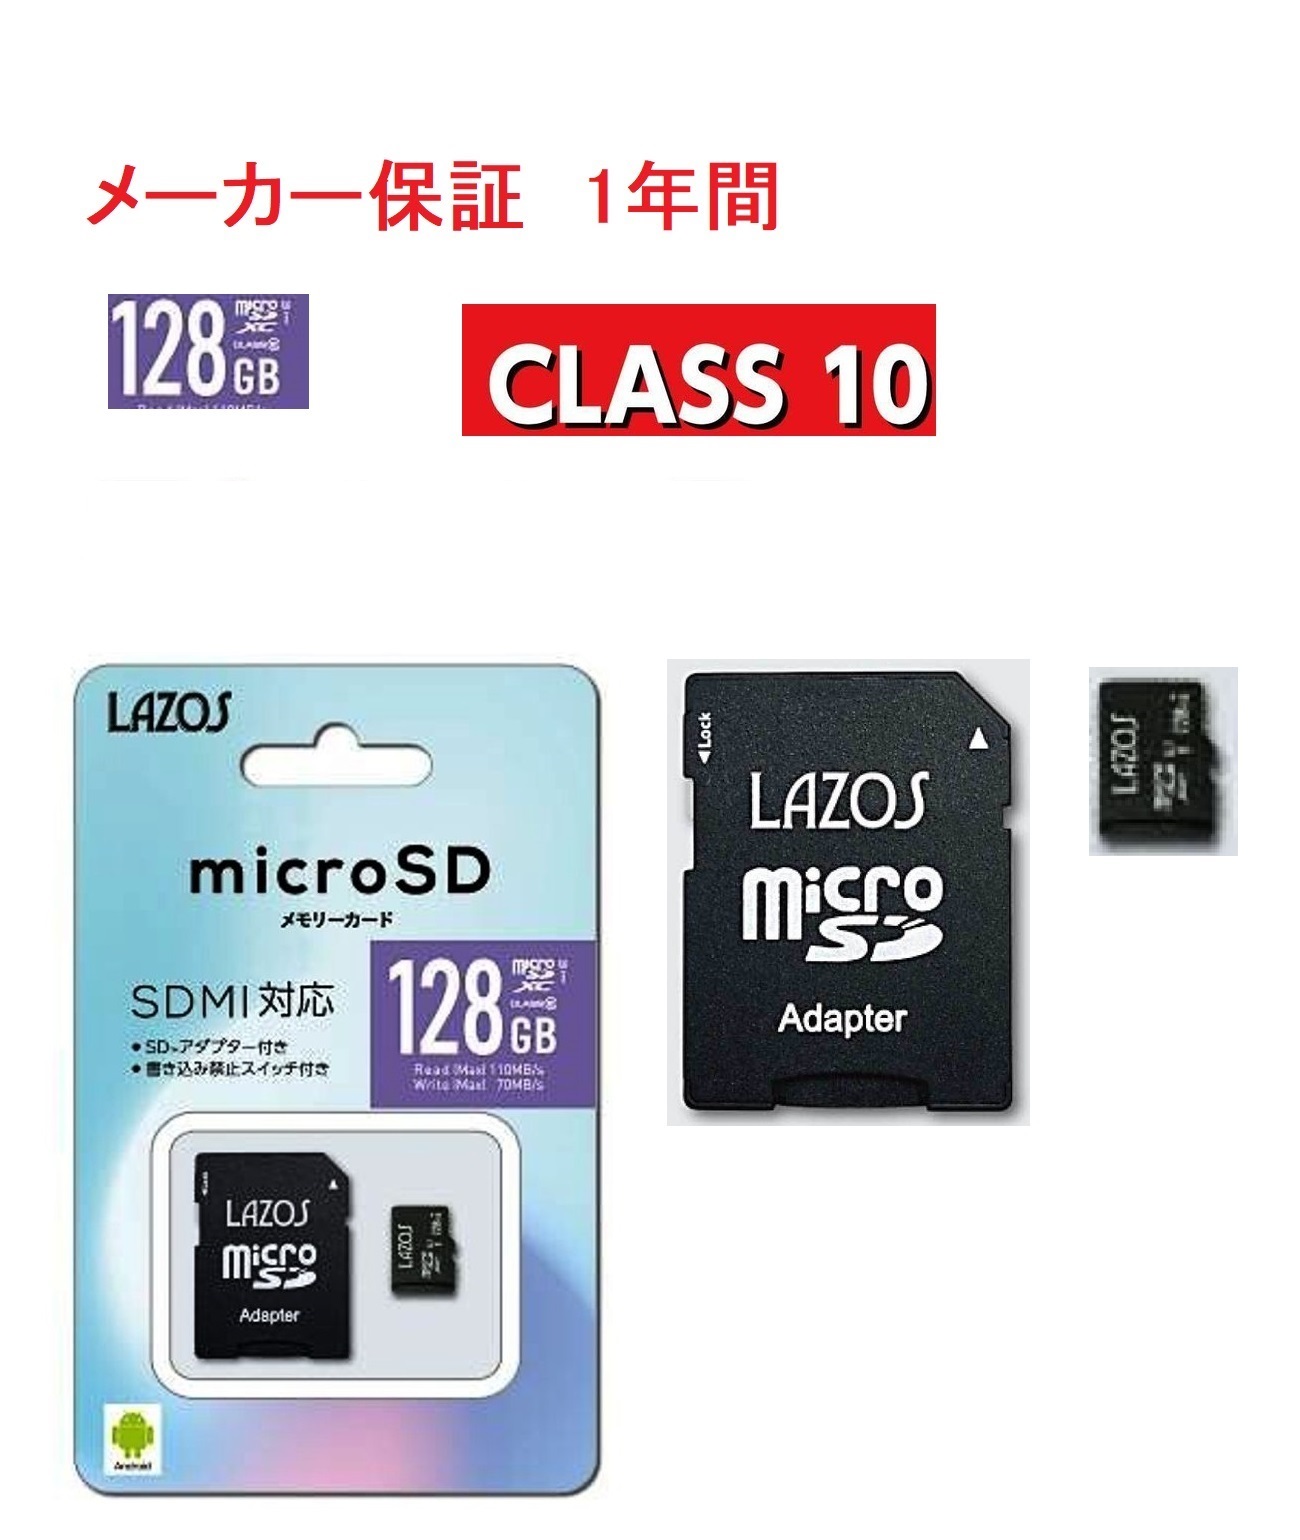 LAZOS micro SD card MicroSD sd card 128 memory card micro SDXC micro SD card memory card 128GB CLASS10 nintendo switch correspondence 